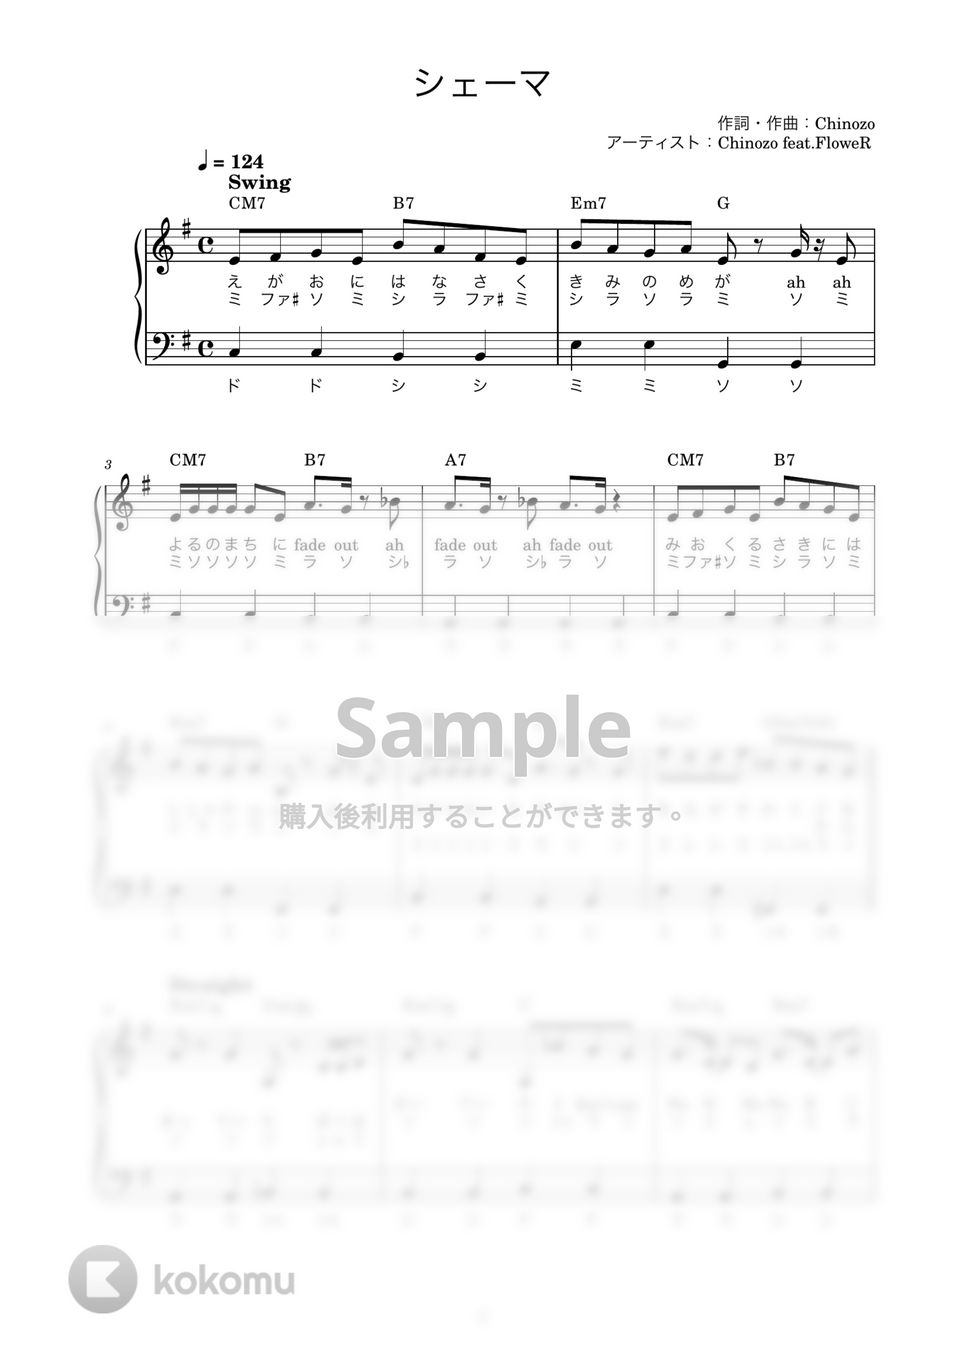 Chinozo feat.FloweR - シェーマ (かんたん / 歌詞付き / ドレミ付き / 初心者) by piano.tokyo